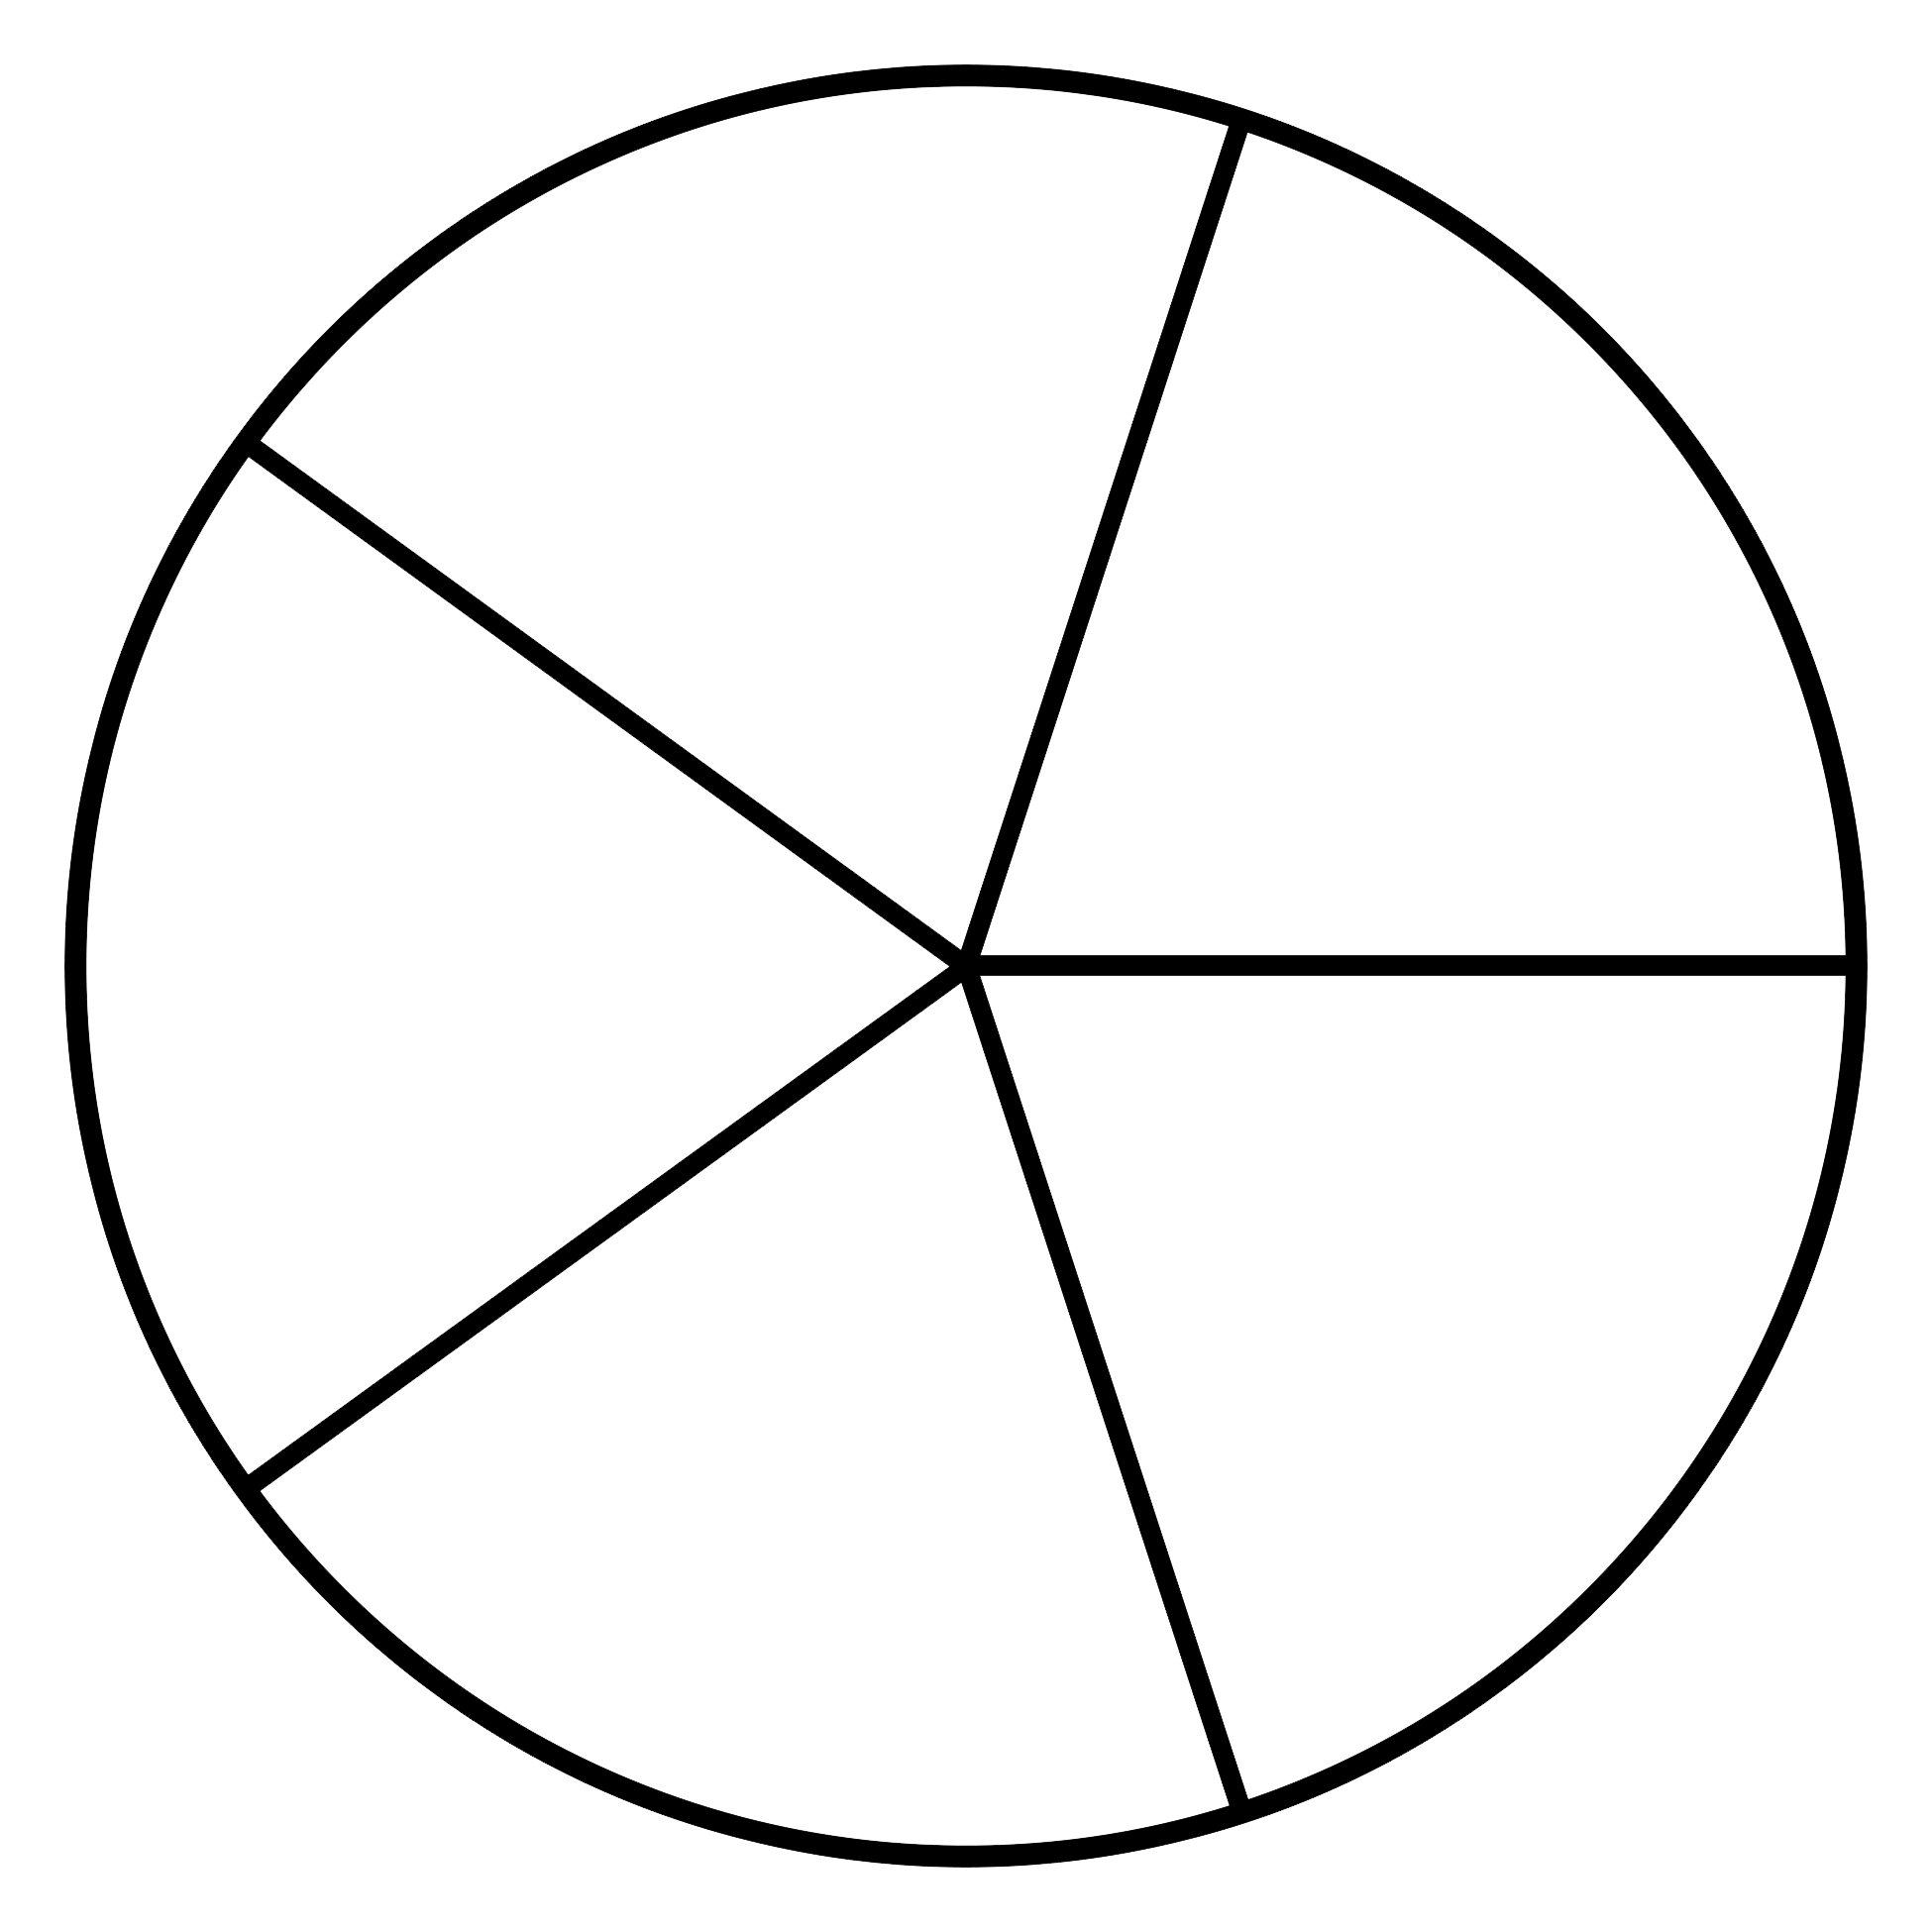 Круг ти. Круг разделенный на части. Круг поделенный на сектора. Круг разделенный на 6 частей. Сектор круга.